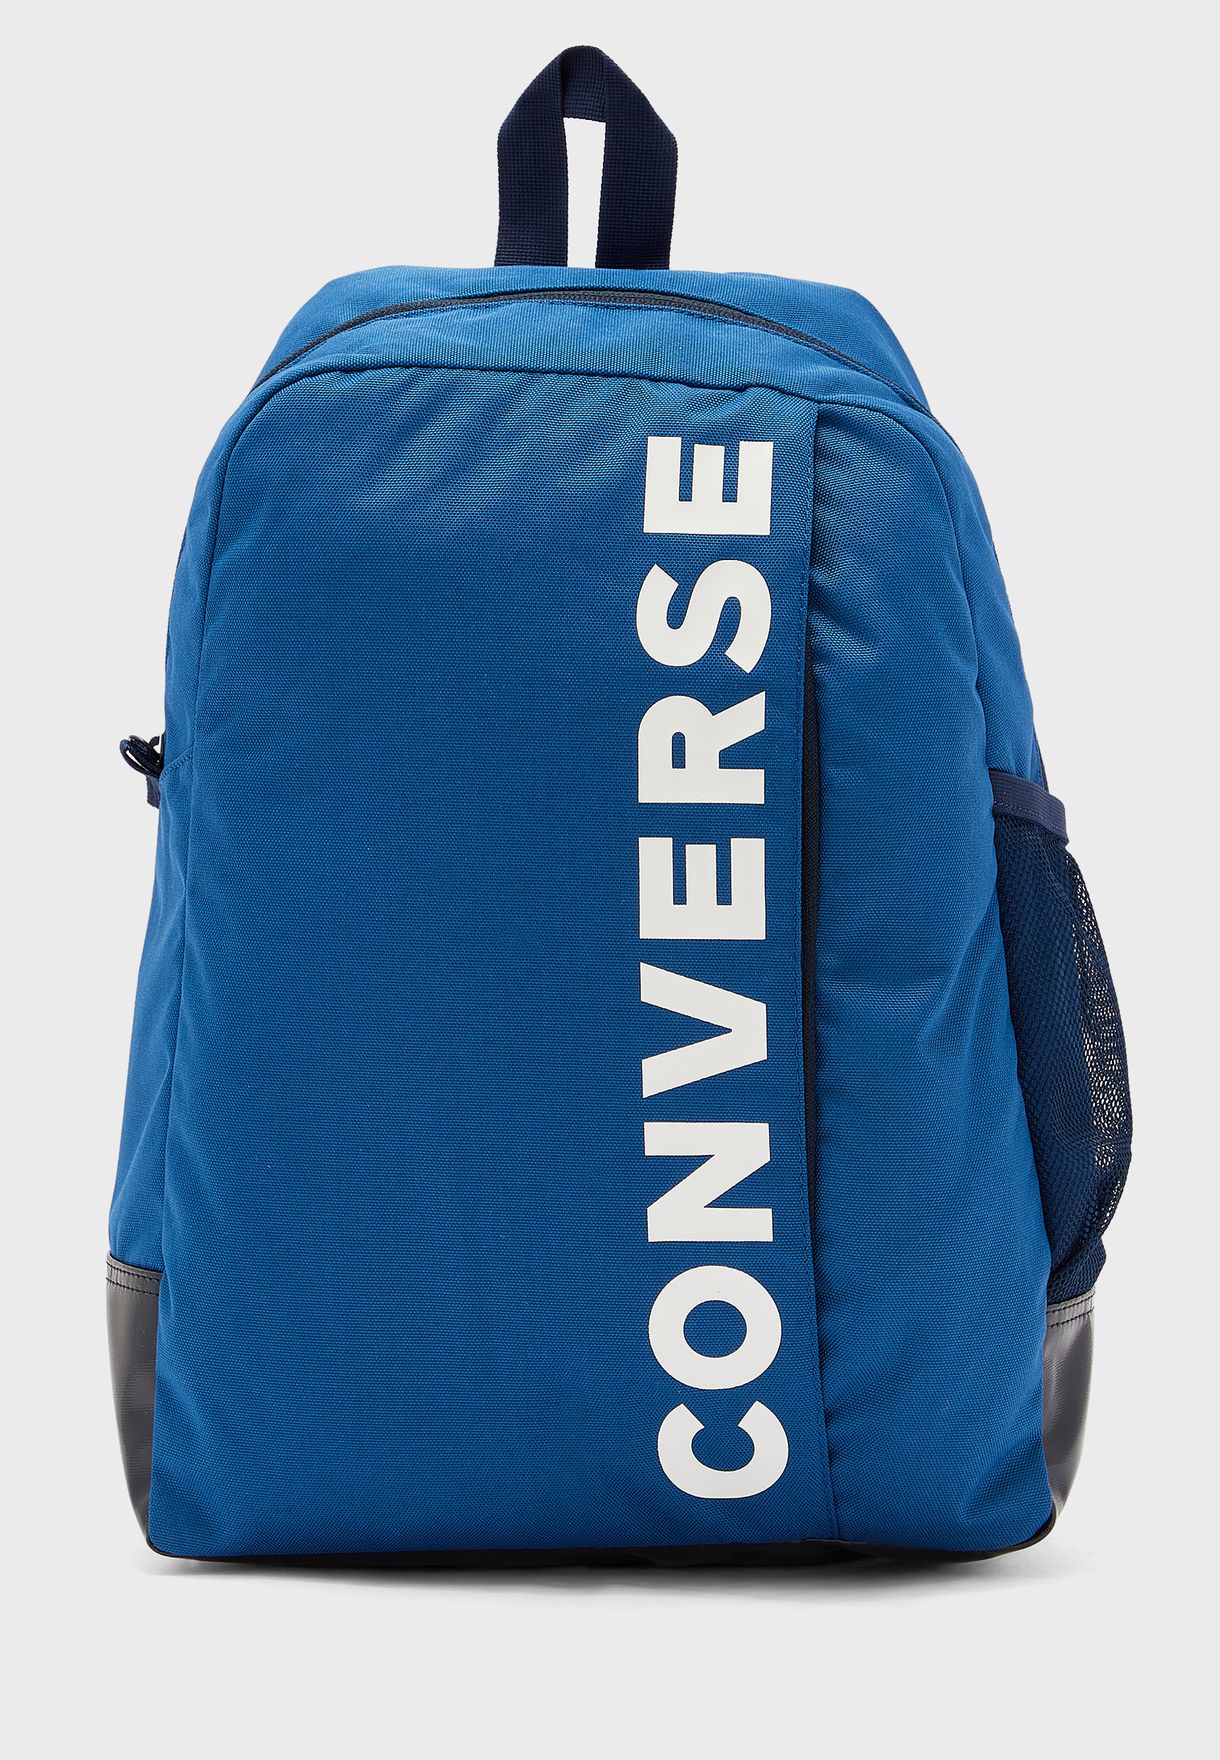 converse blue bag